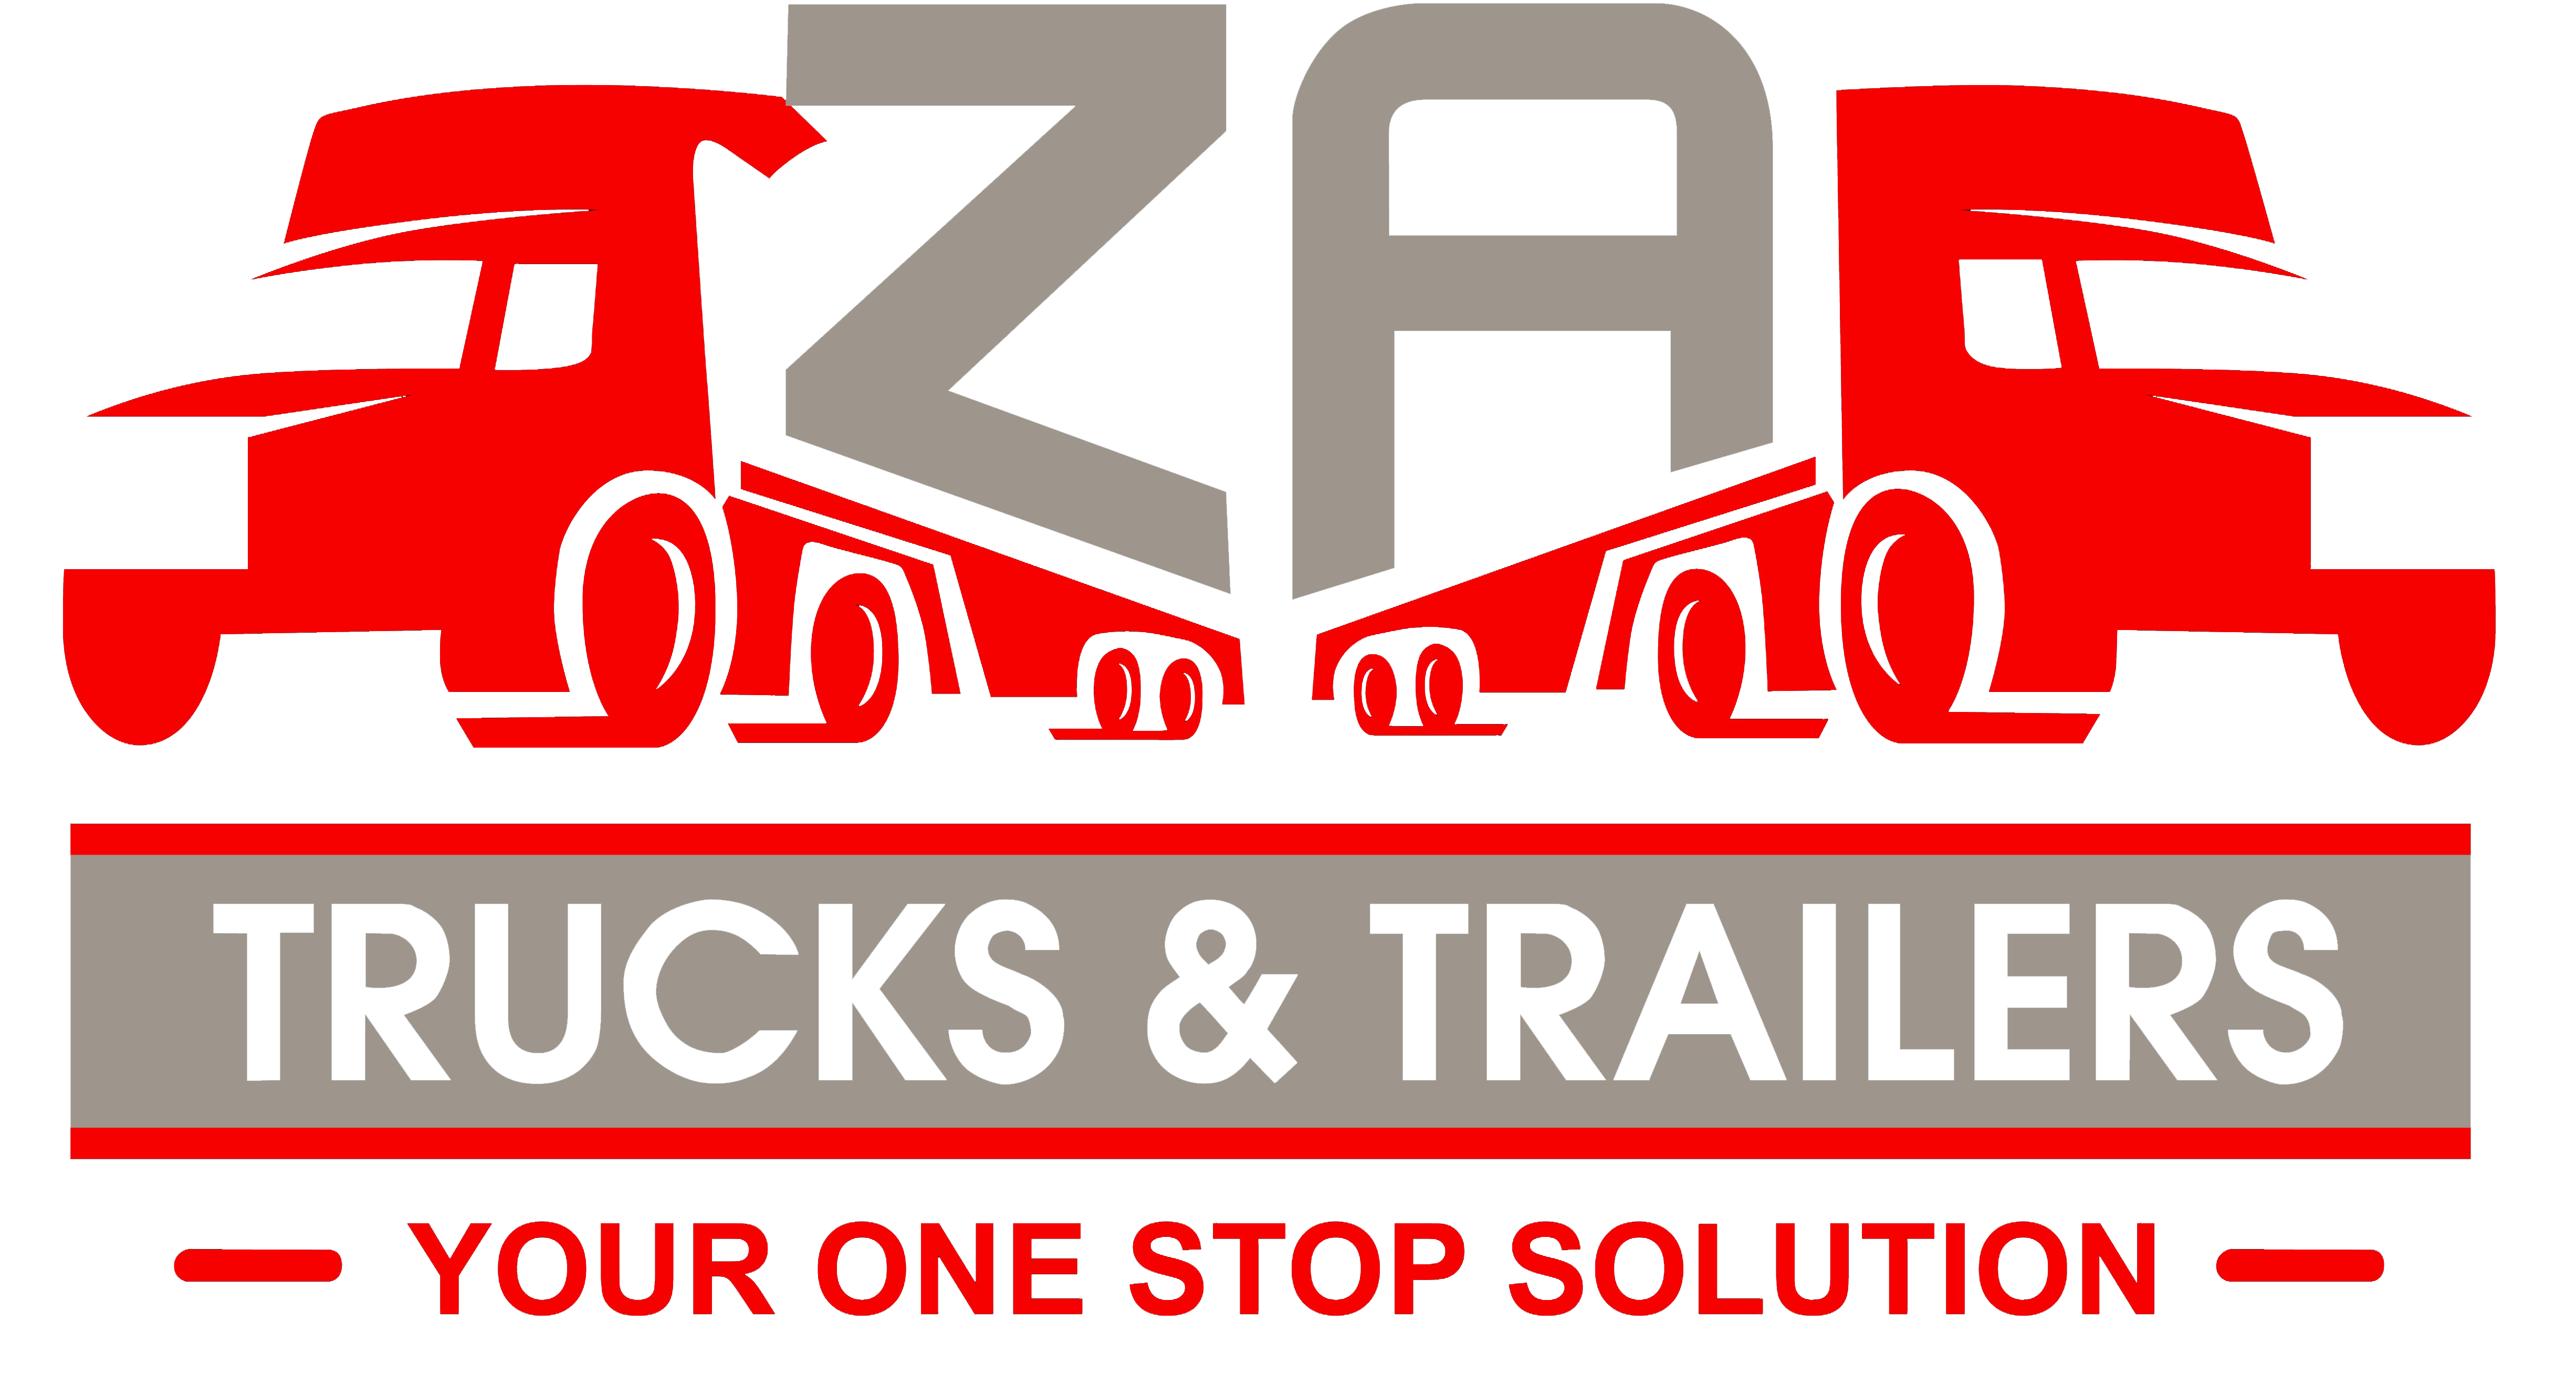 ZA Trucks & Trailers (Pty) Ltd